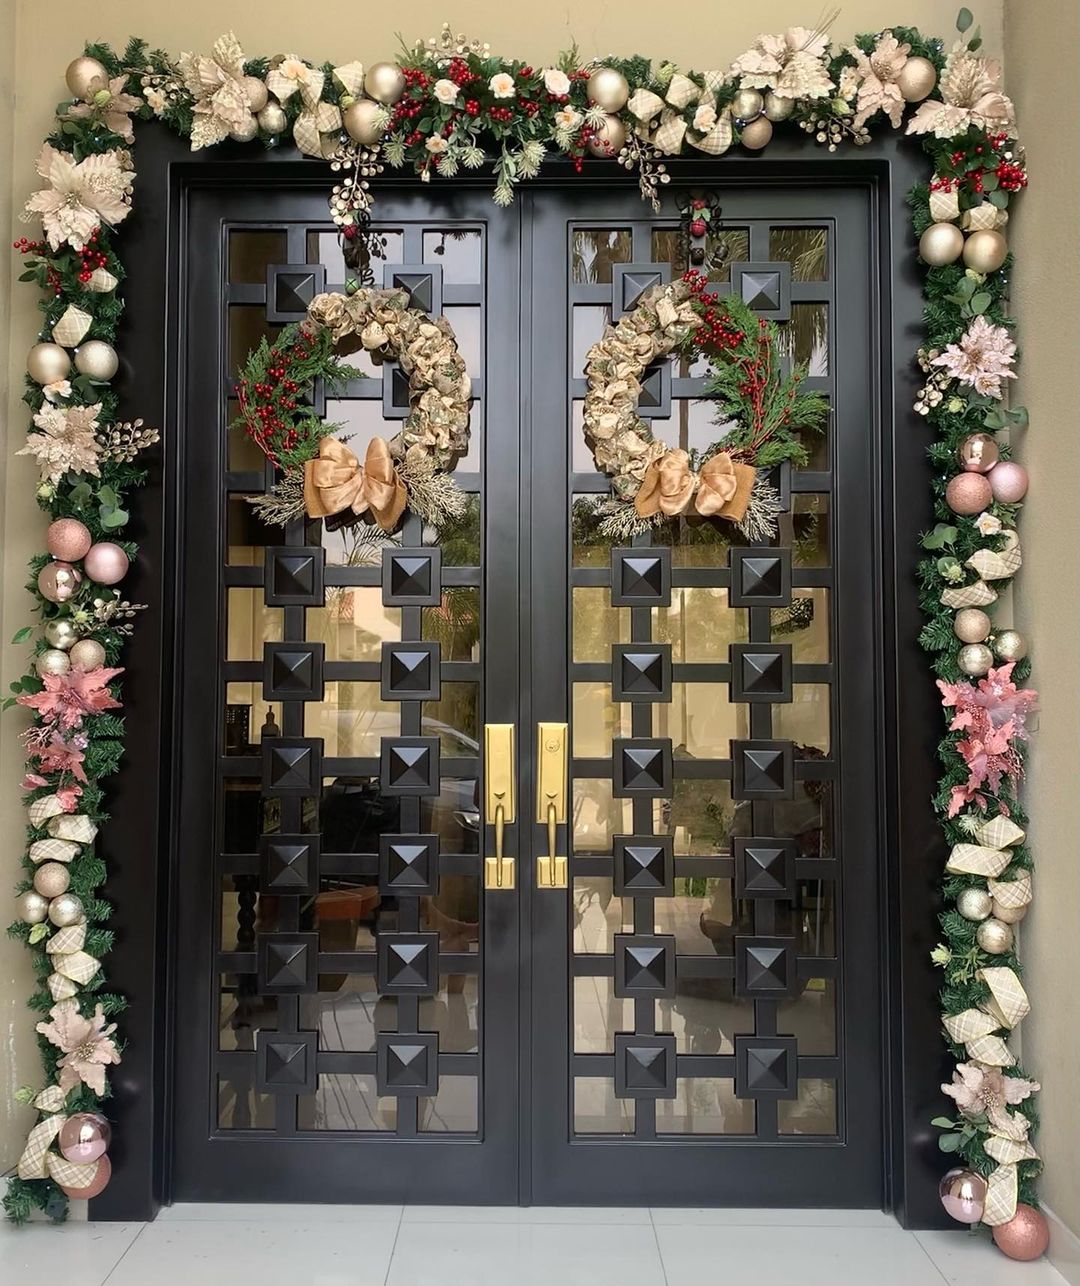 decoración navideña para puertas de entrada con cintas